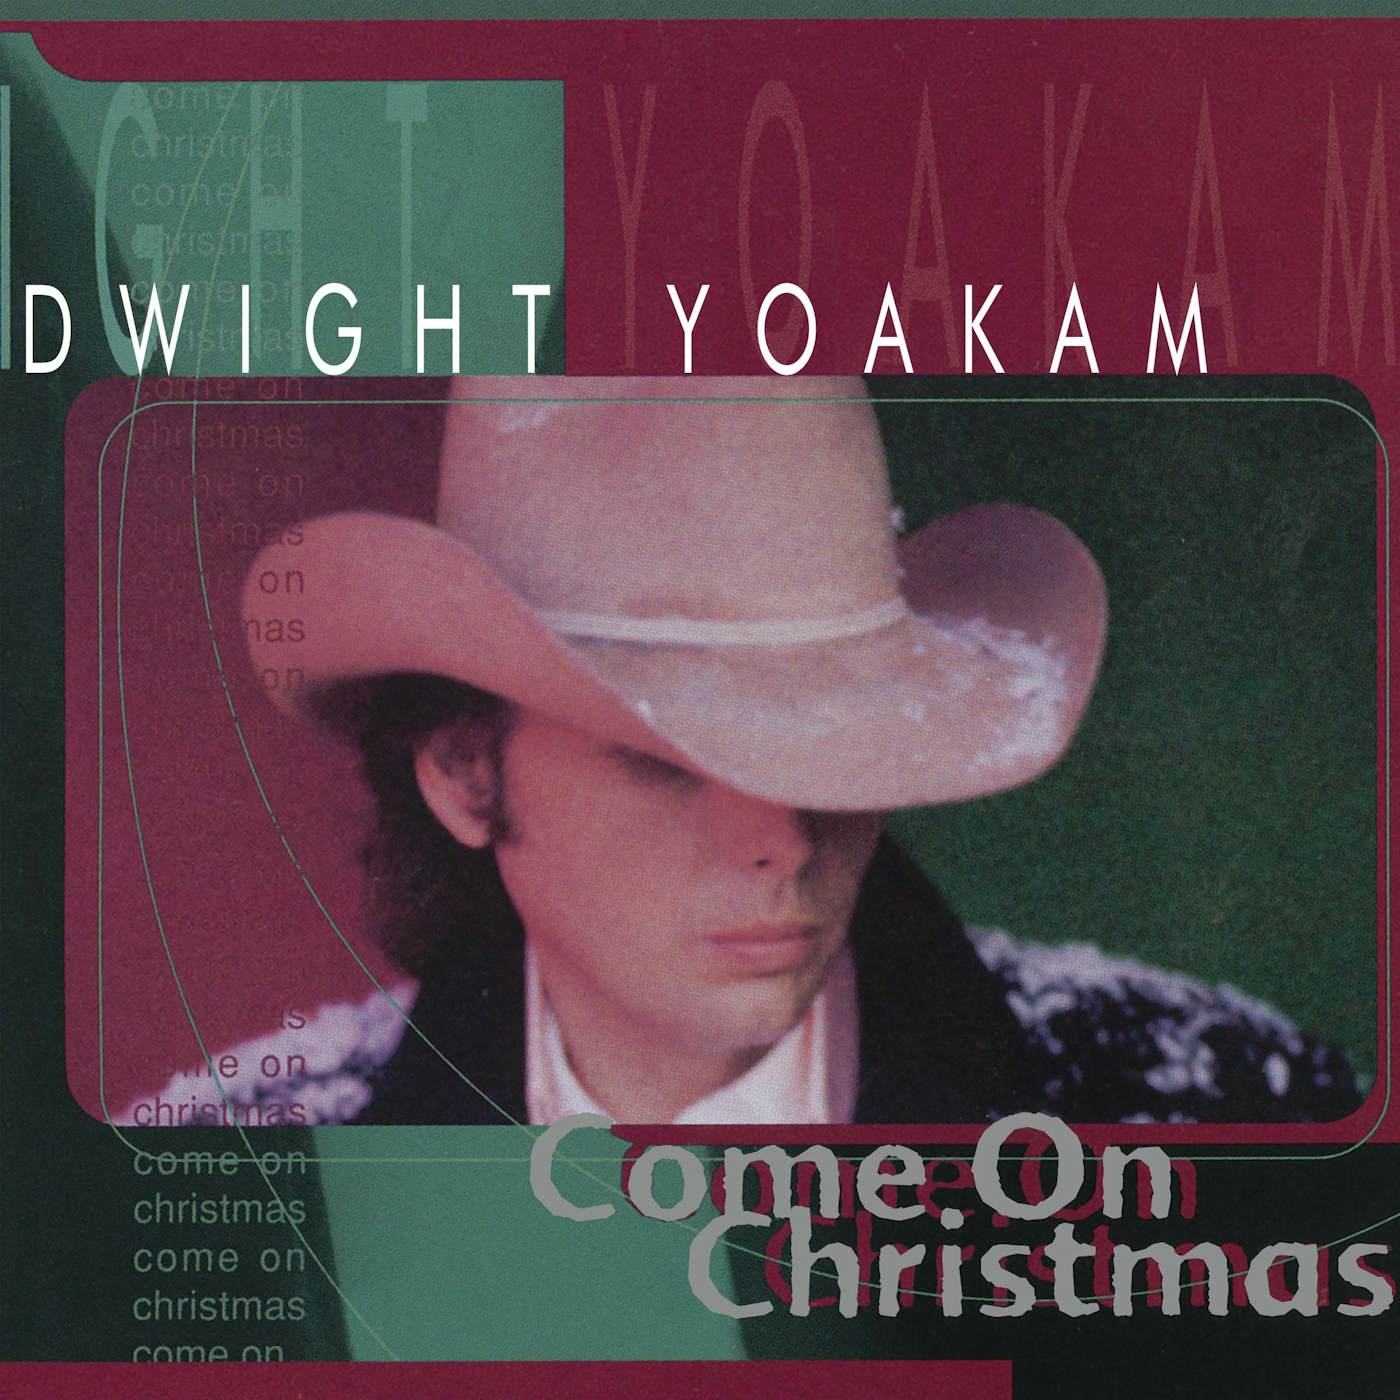 Dwight Yoakam Come On Christmas Vinyl Record